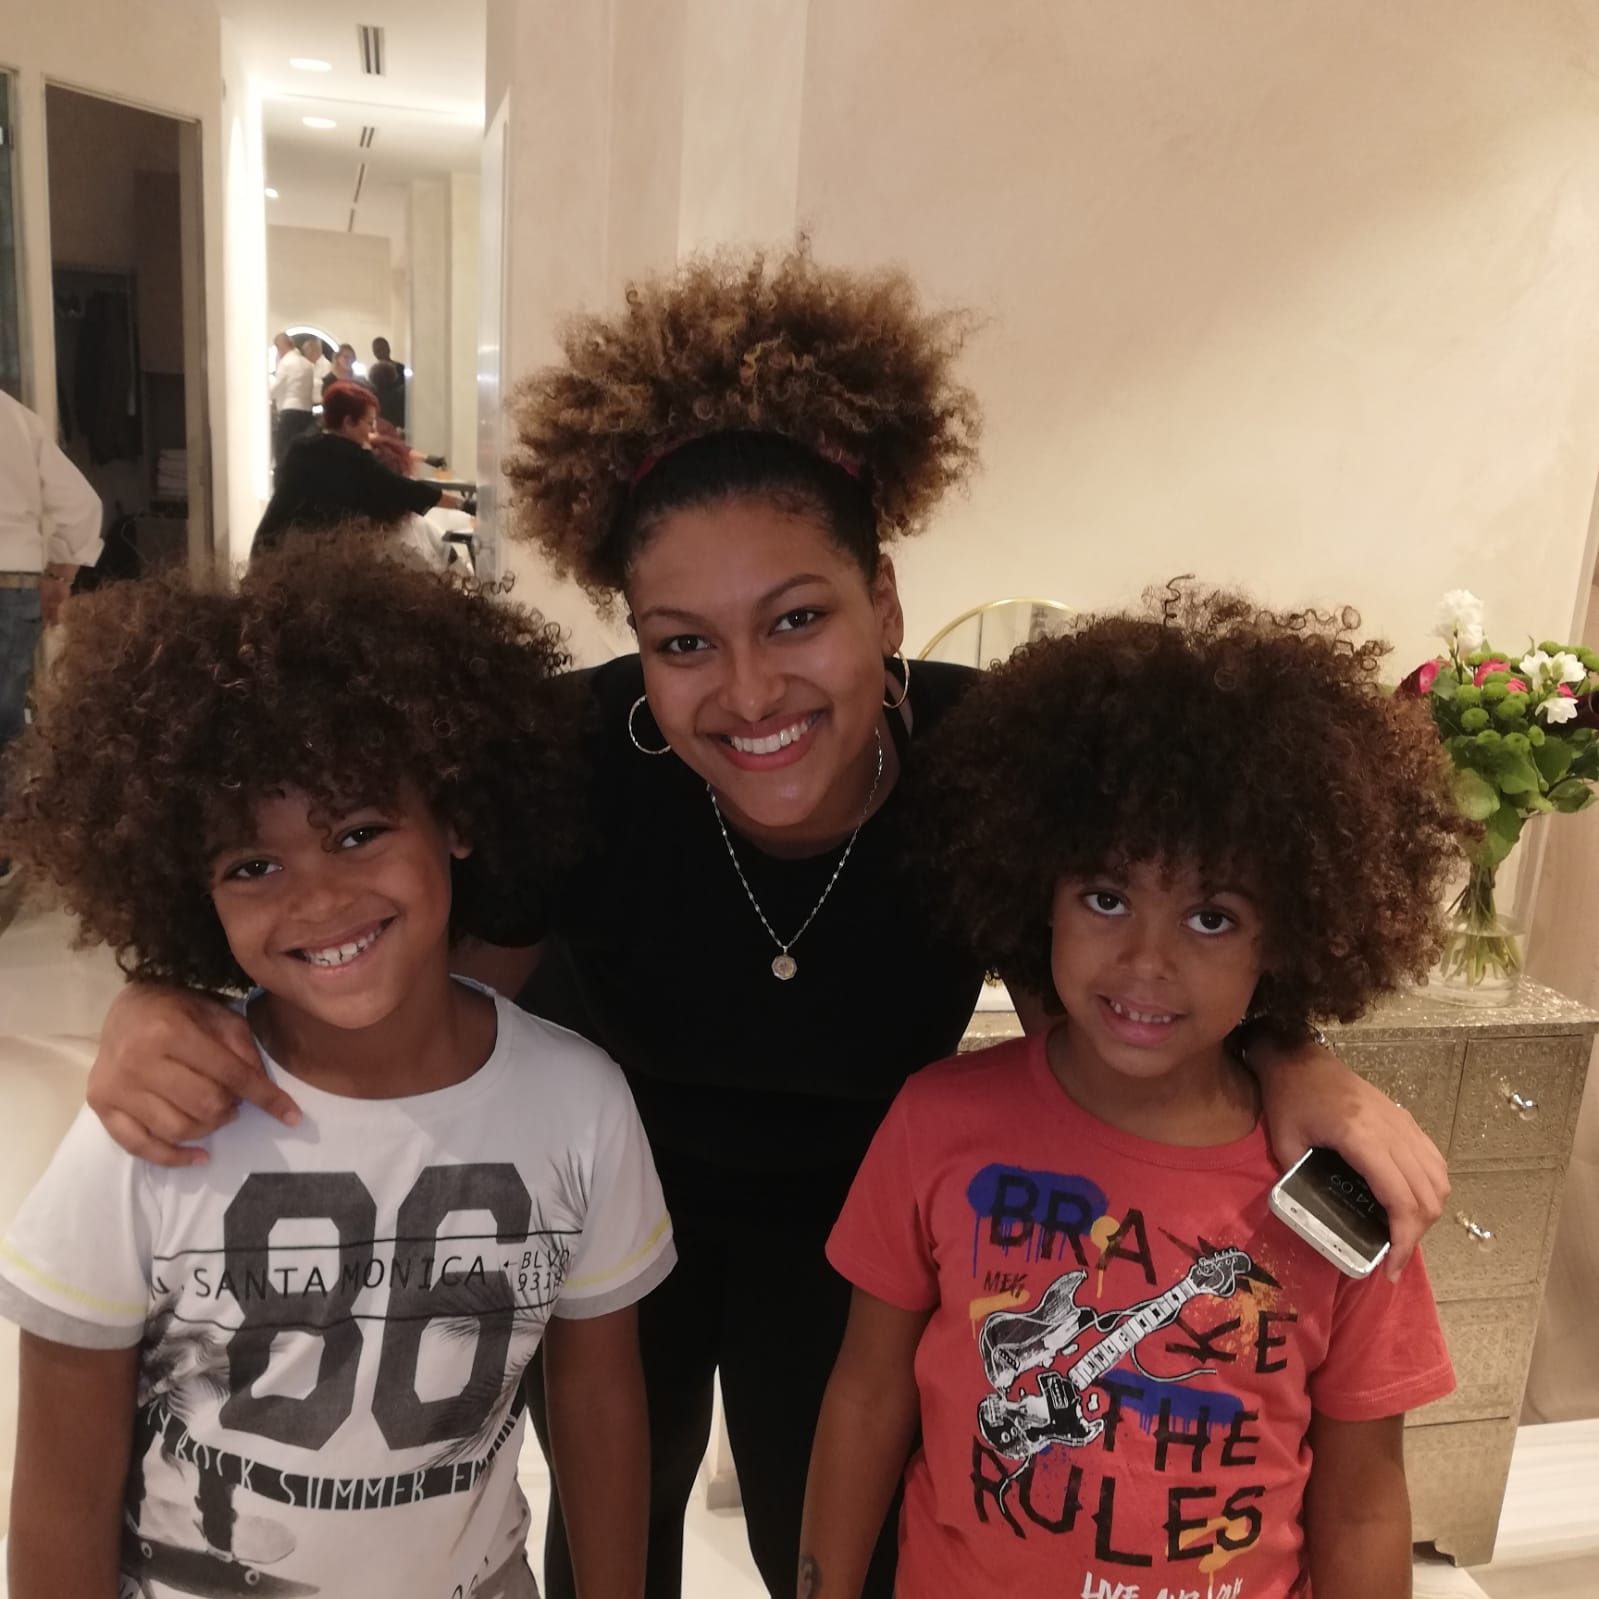 capelli afro bambini